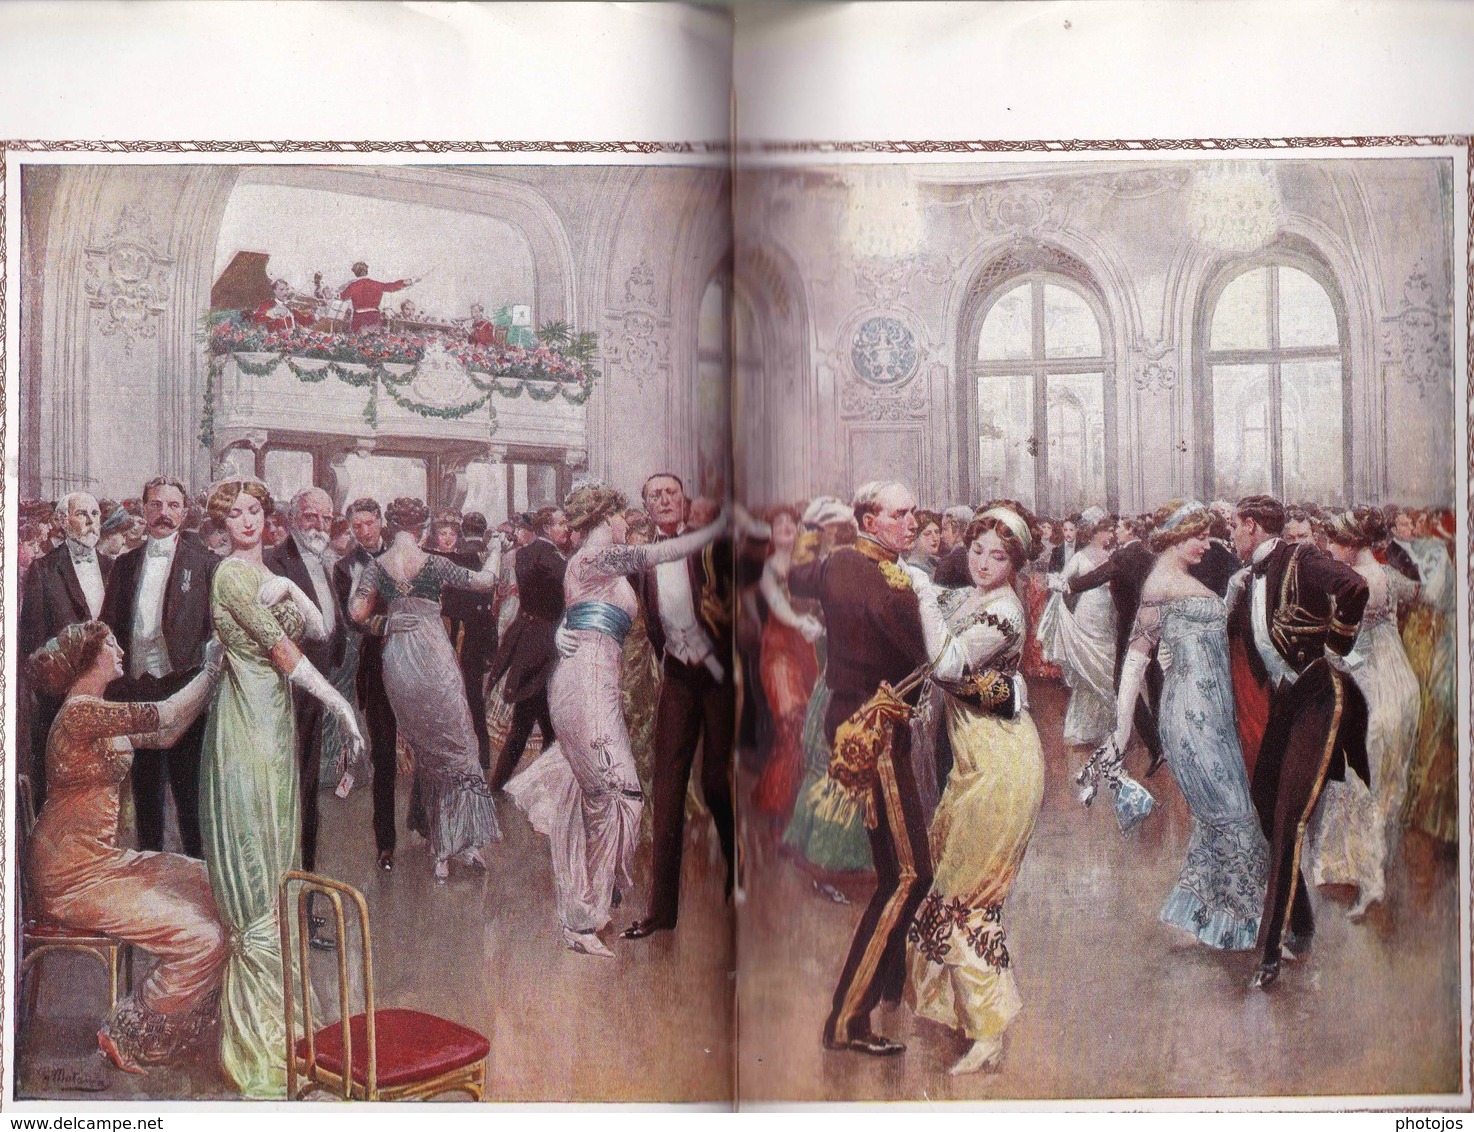 Advertising Book  "The Savoyard" : Savoy Palace, Claridge's, Berkeley, 84 P. 75 Illustrations  Schweppes - Ohne Zuordnung